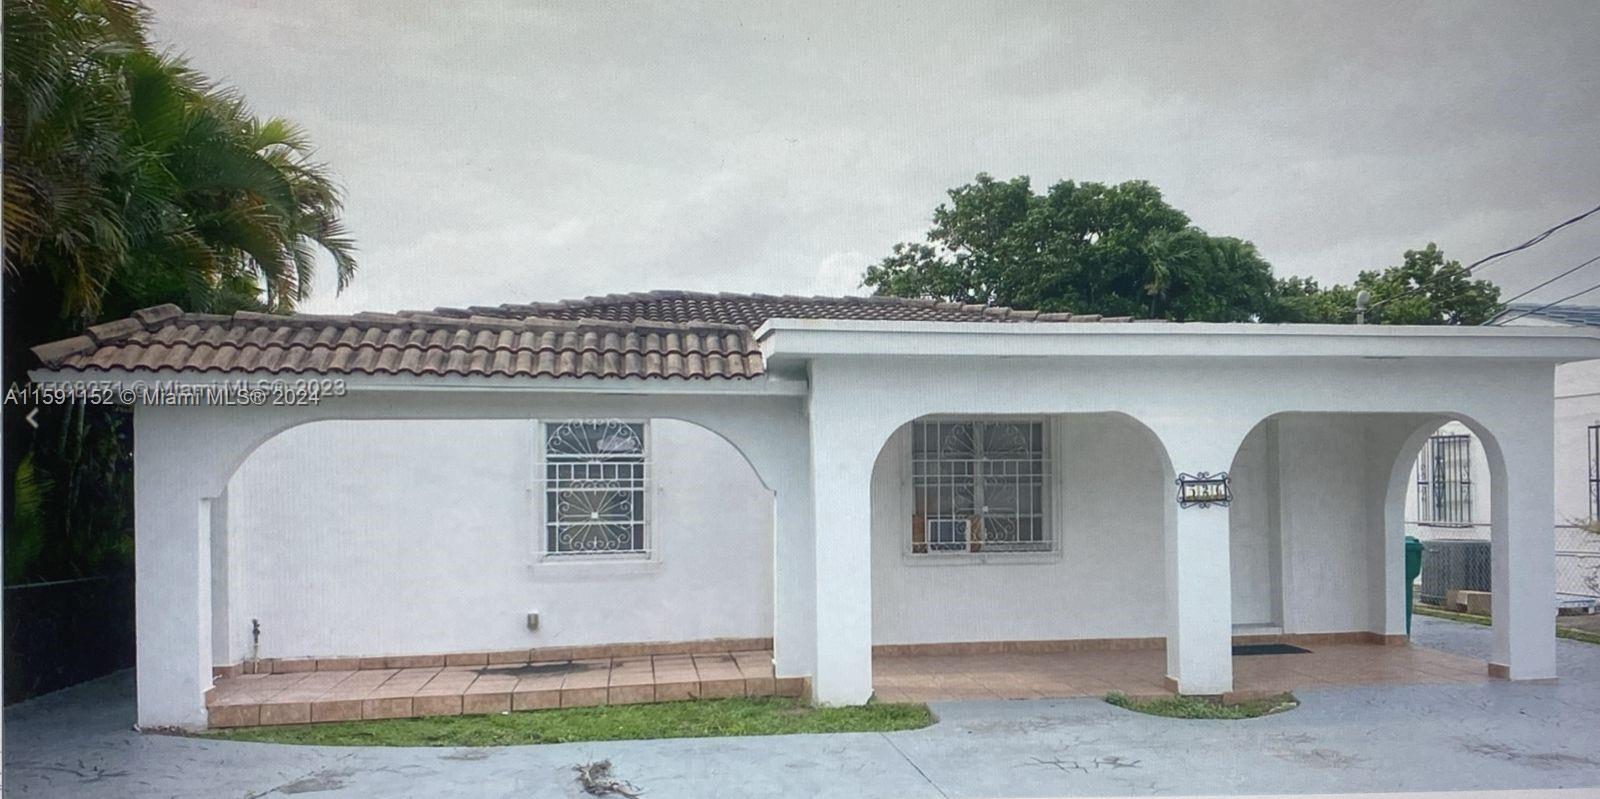 Rental Property at 526 Sw 64th Ave, Miami, Broward County, Florida -  - $928,000 MO.